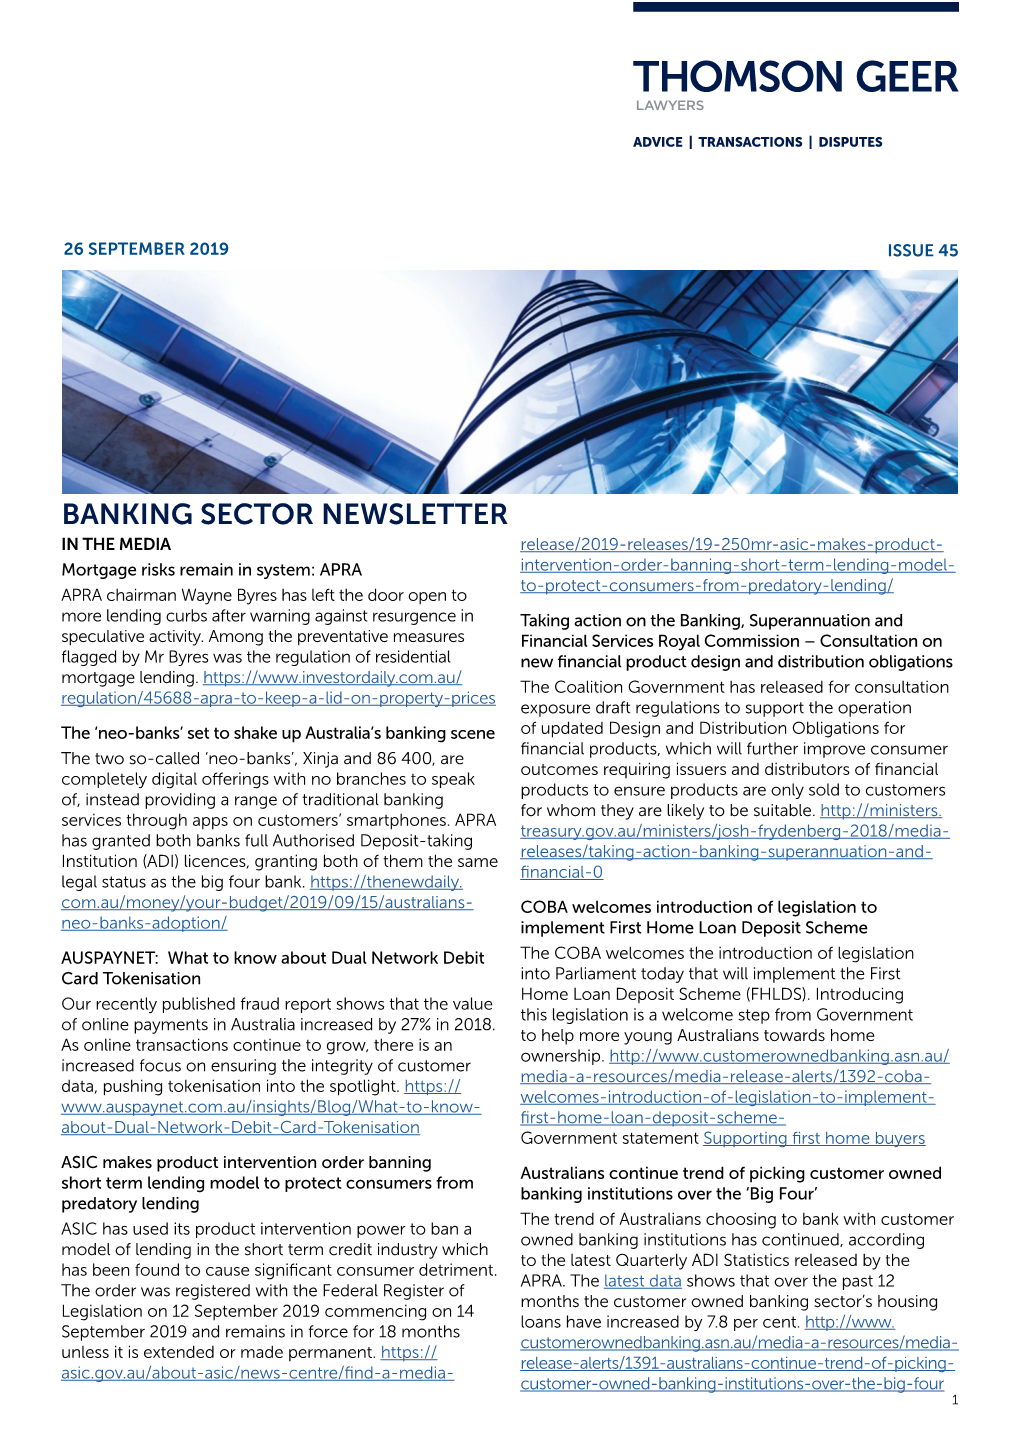 Banking Sector Newsletter